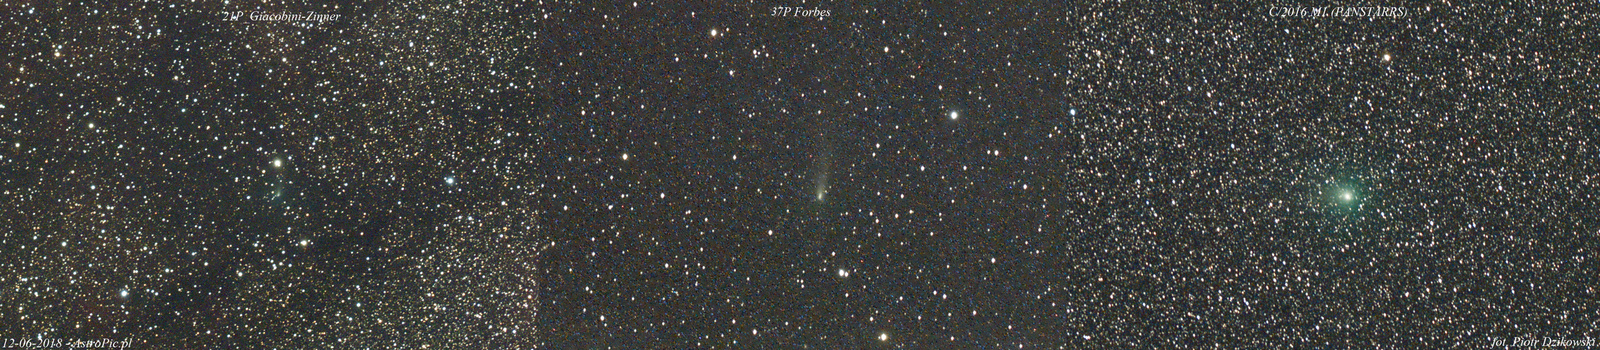 comets_trio_60.thumb.jpg.2a2cd5eaaccb2413fe7385c1180f1c13.jpg